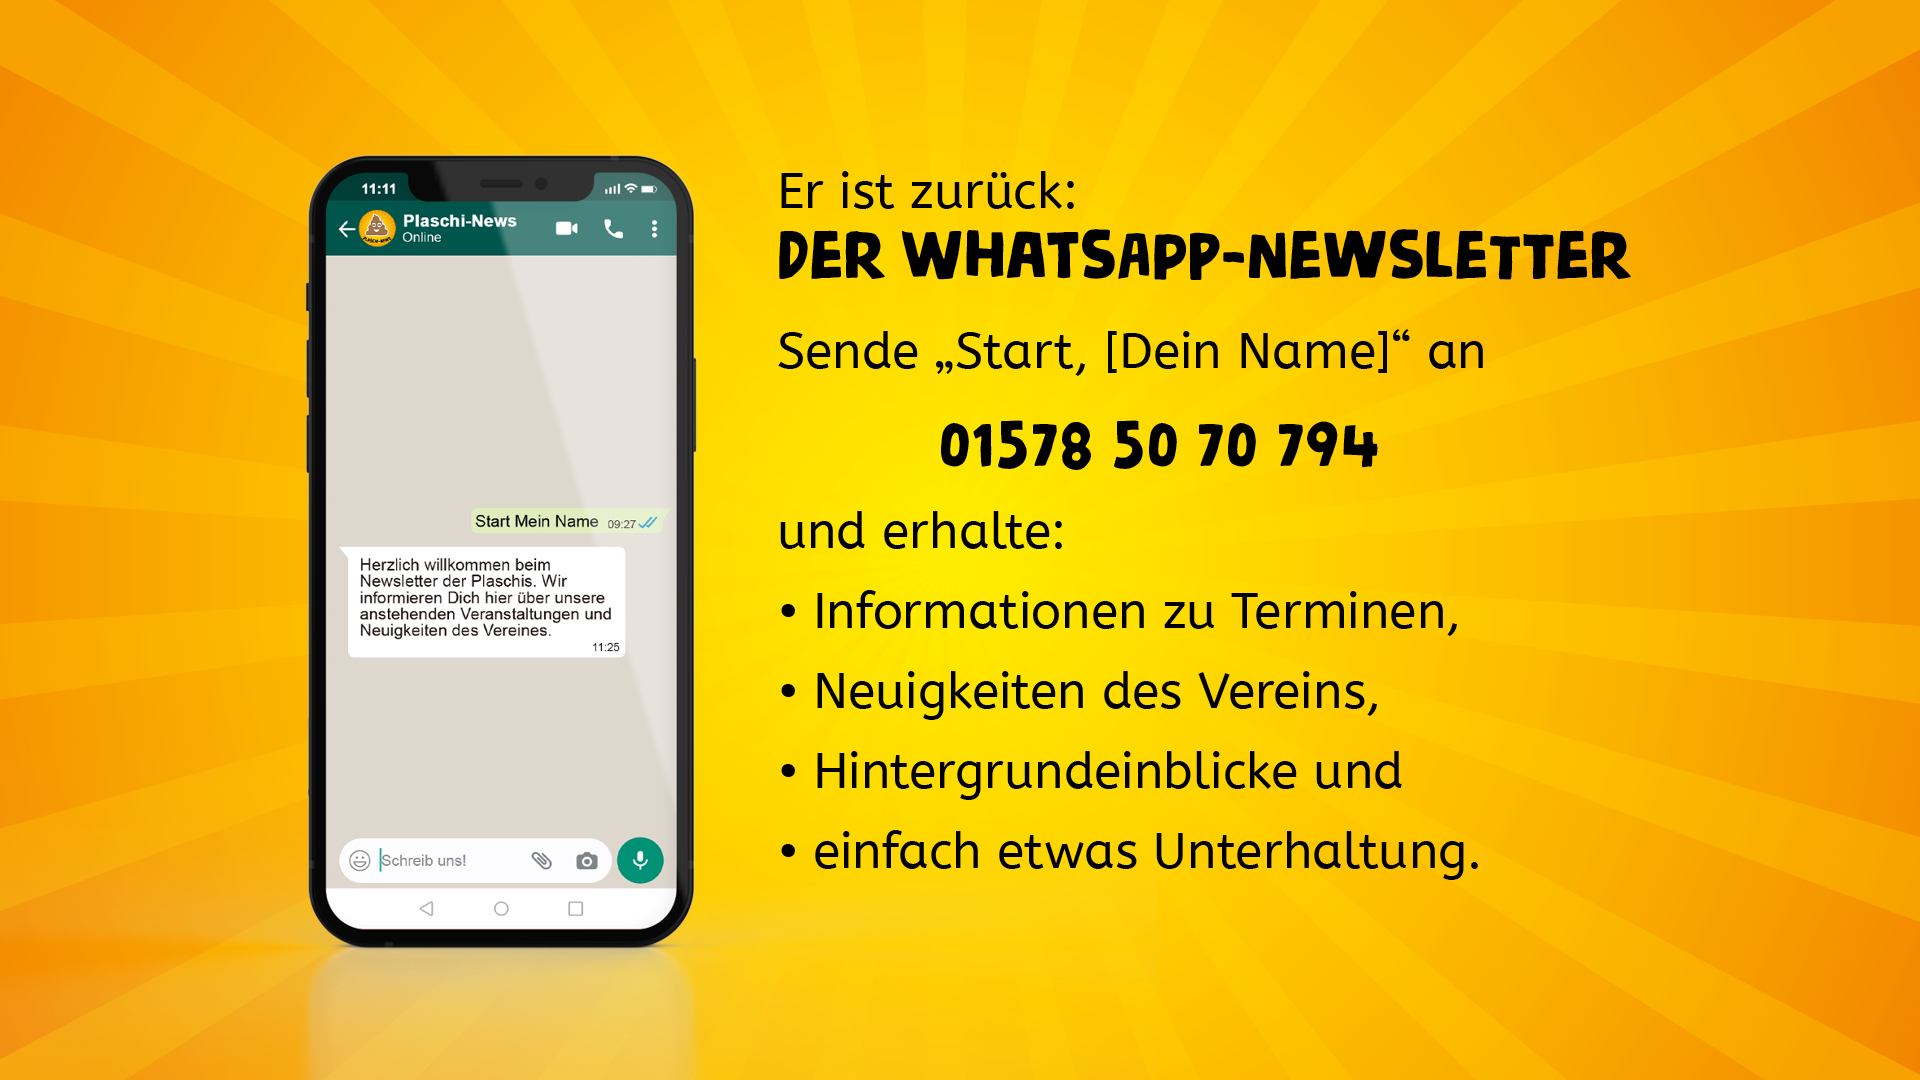 Start_WhatsApp-Newsletter_Plaschis